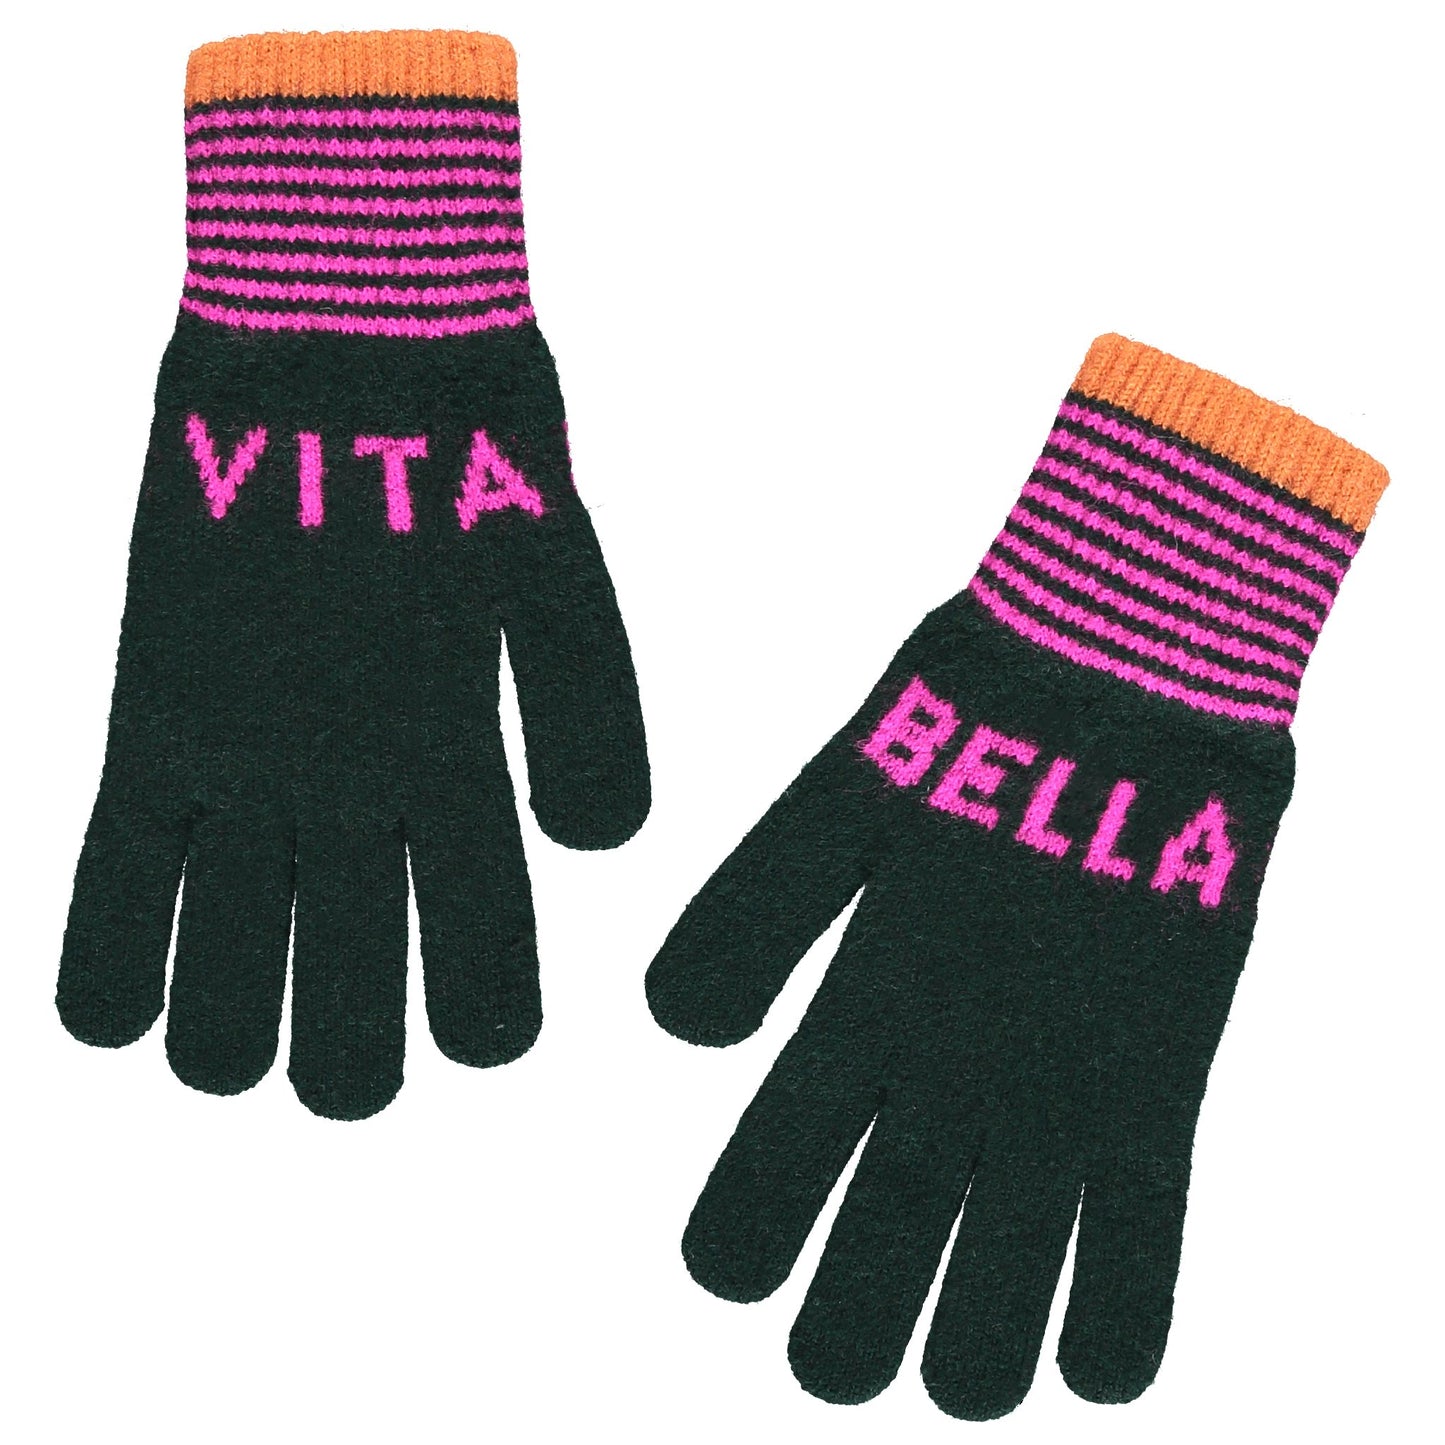 Vita Bella Gloves in Dark Green and Fuchsia